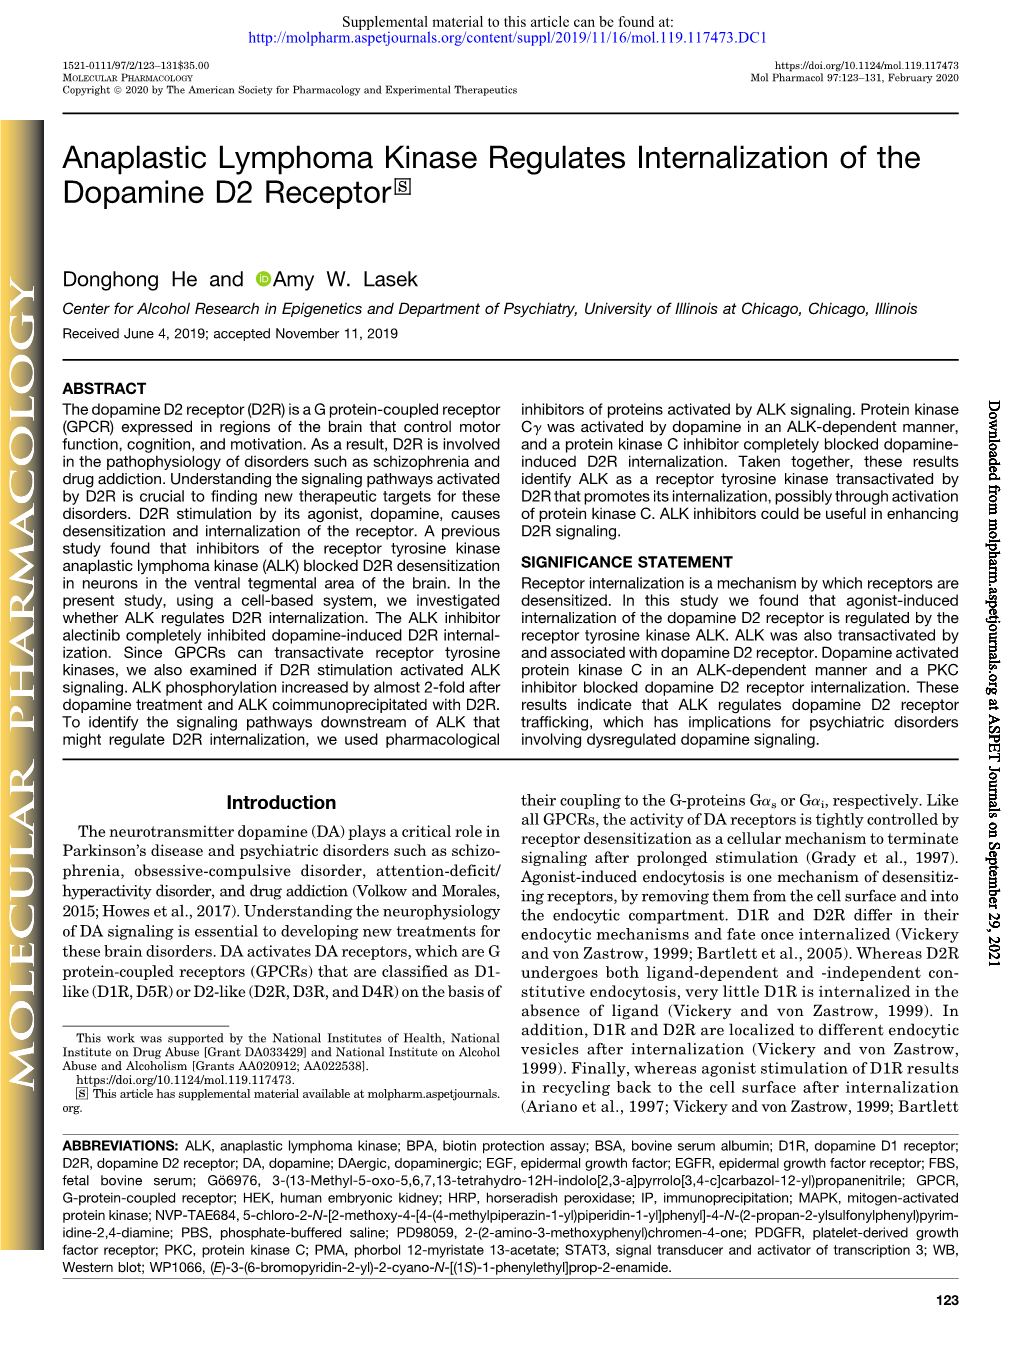 Anaplastic Lymphoma Kinase Regulates Internalization of the Dopamine D2 Receptor S